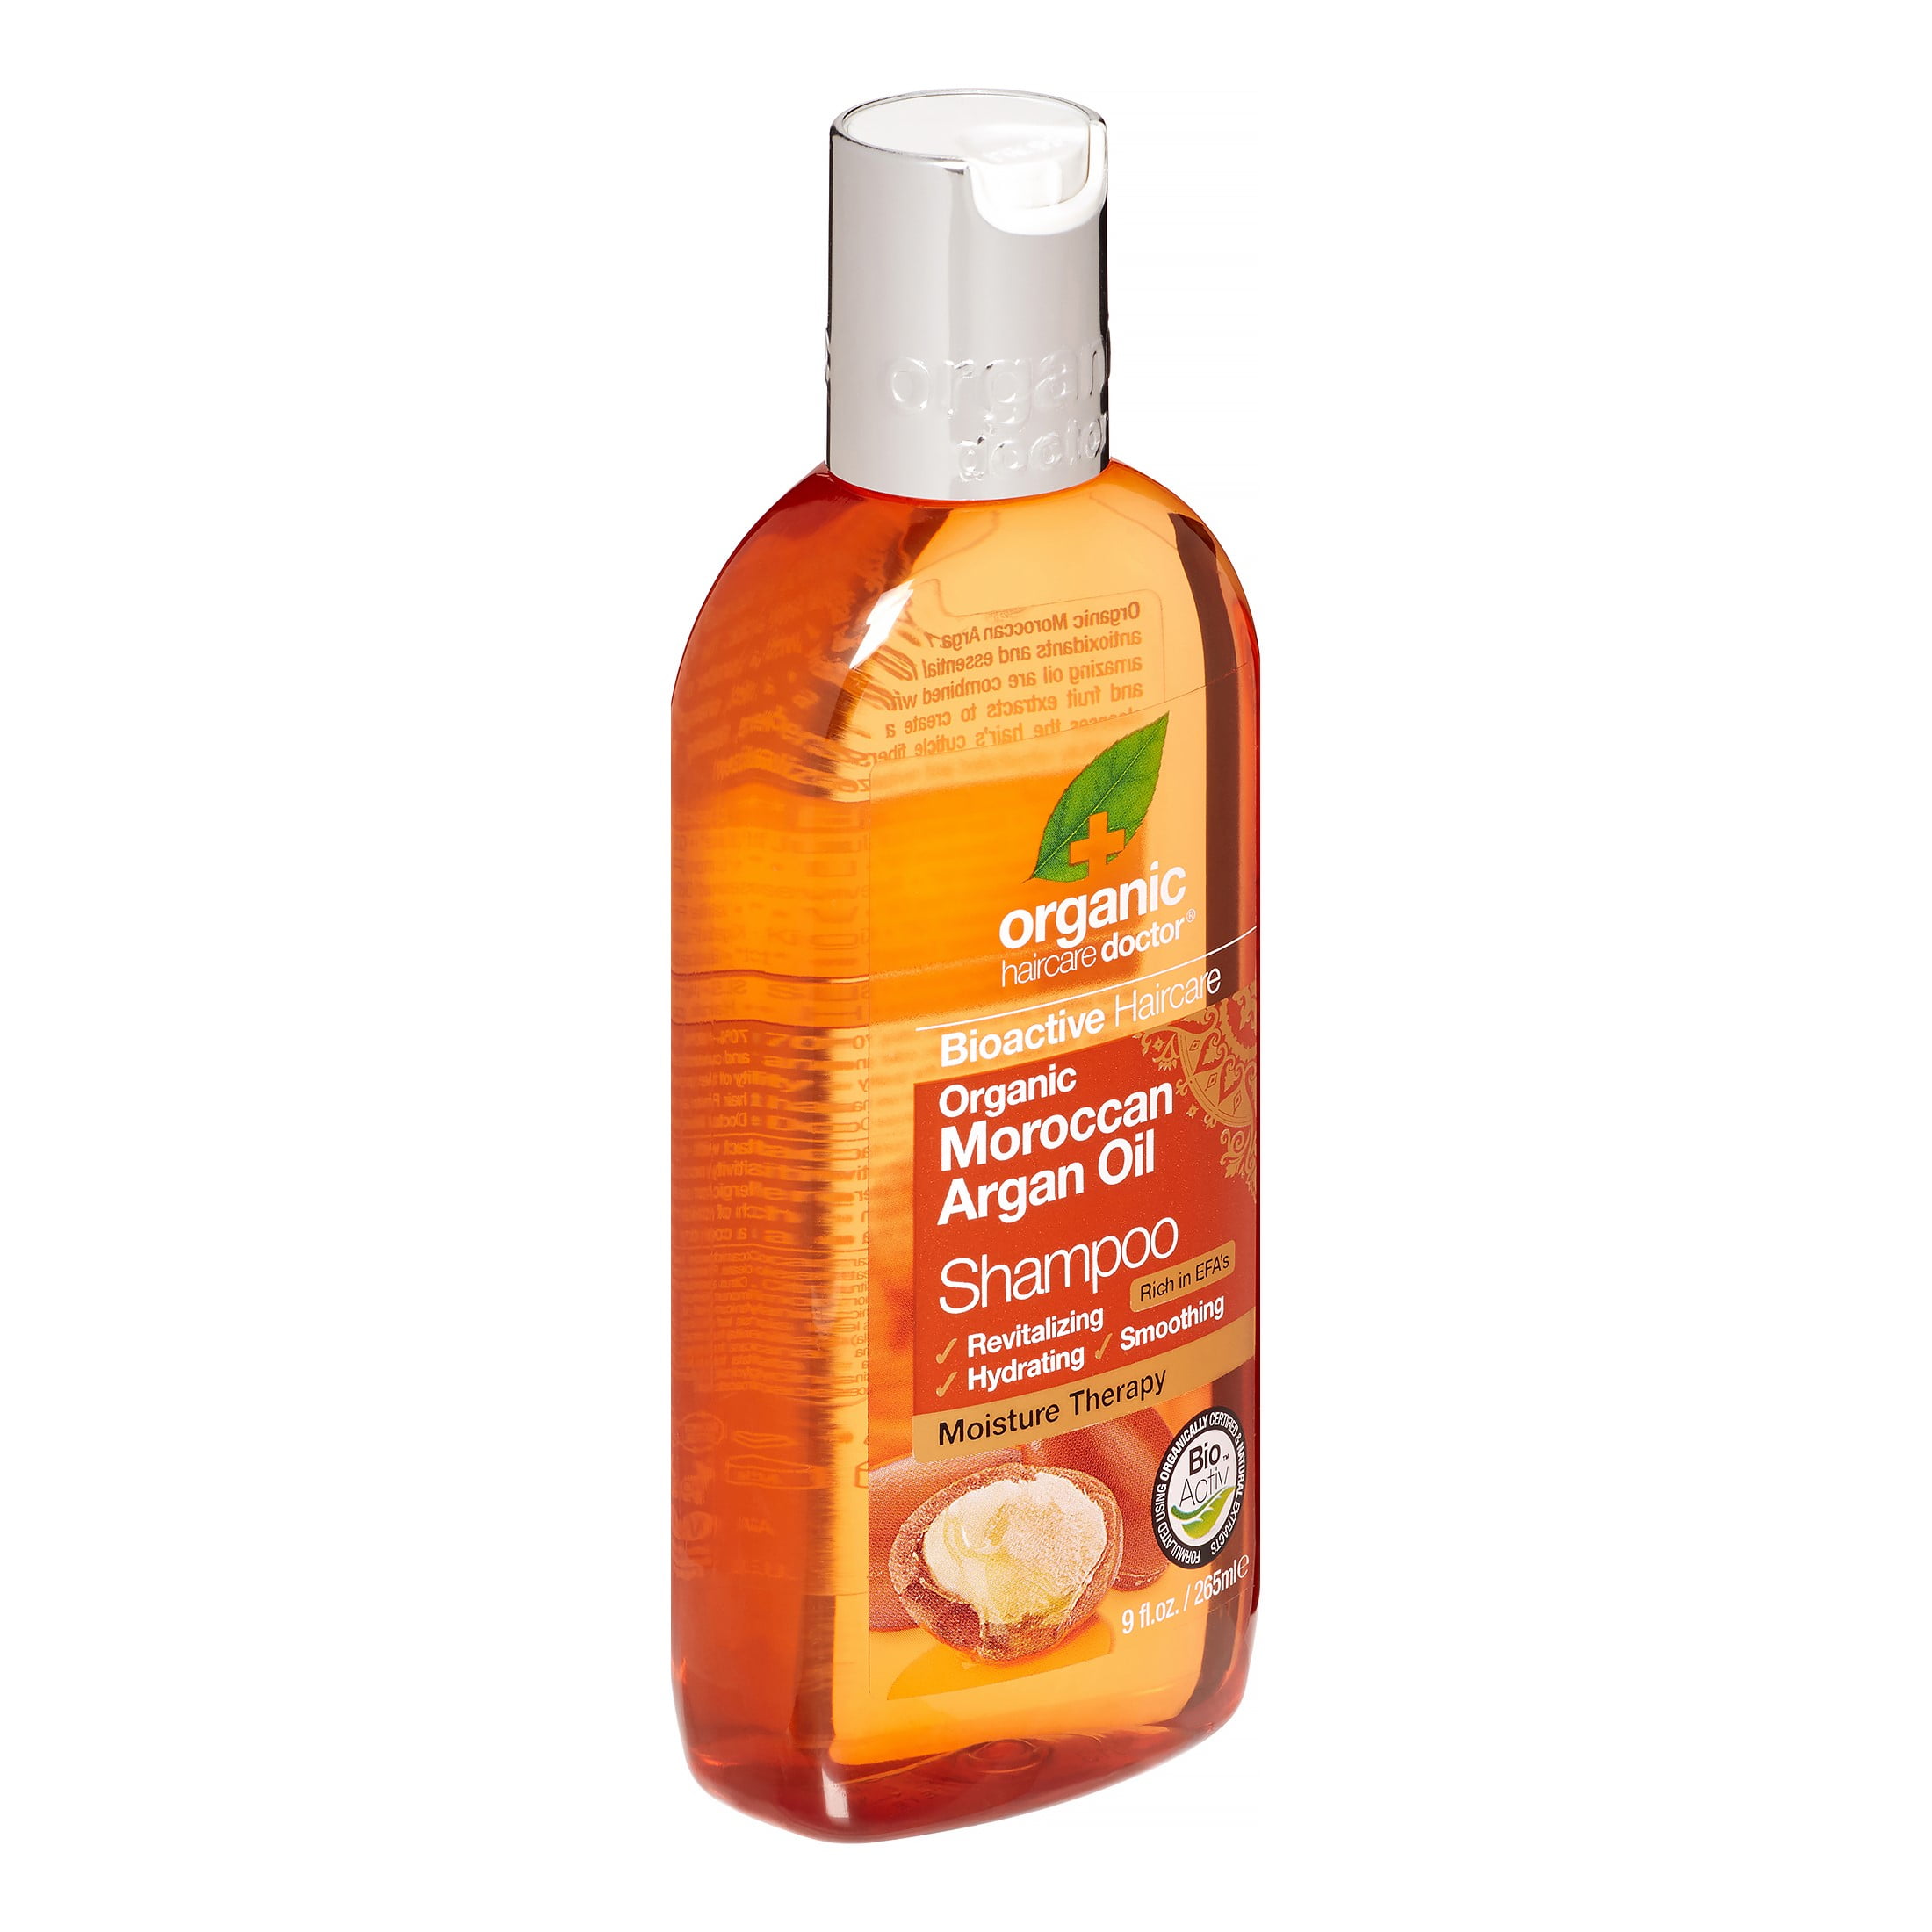 Narabar skotsk evne Organic Doctor Moroccan Argan Oil Shampoo, 9 Fl Oz - Walmart.com